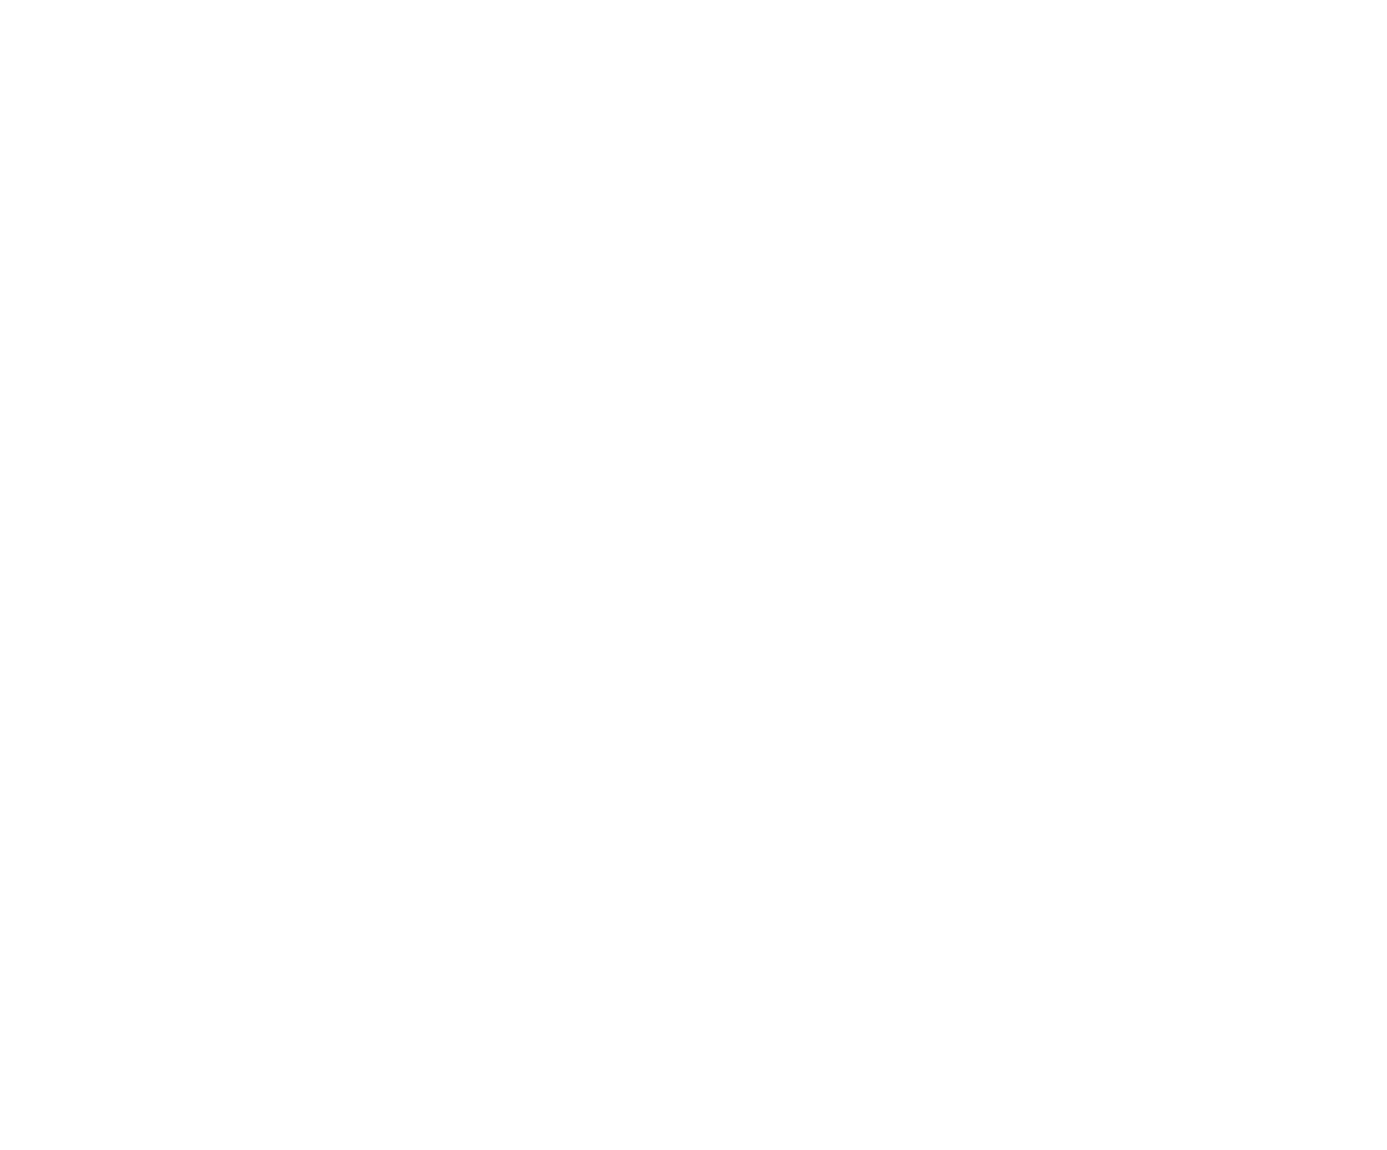 Miss Teen Aruba International a tuma luga dia18 di juli na Cas di Cultura  Den e competencia di 8 candidata, e ganado   